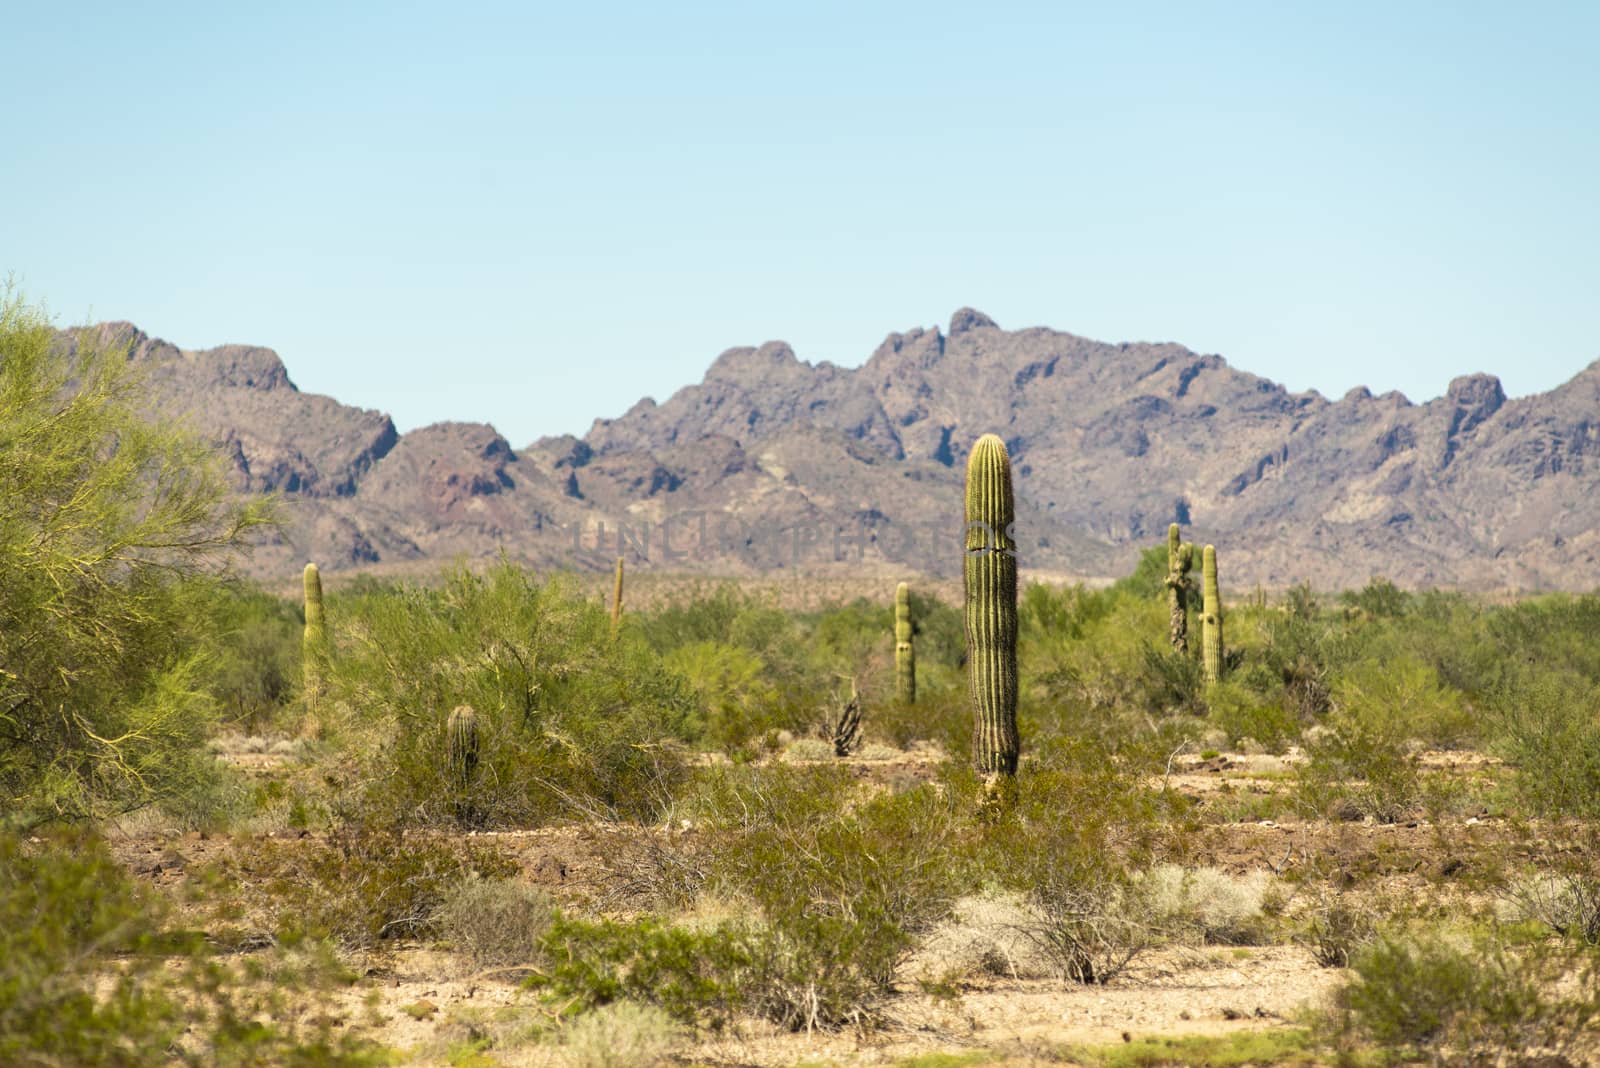 Saguaro cacti in desert of Arizona